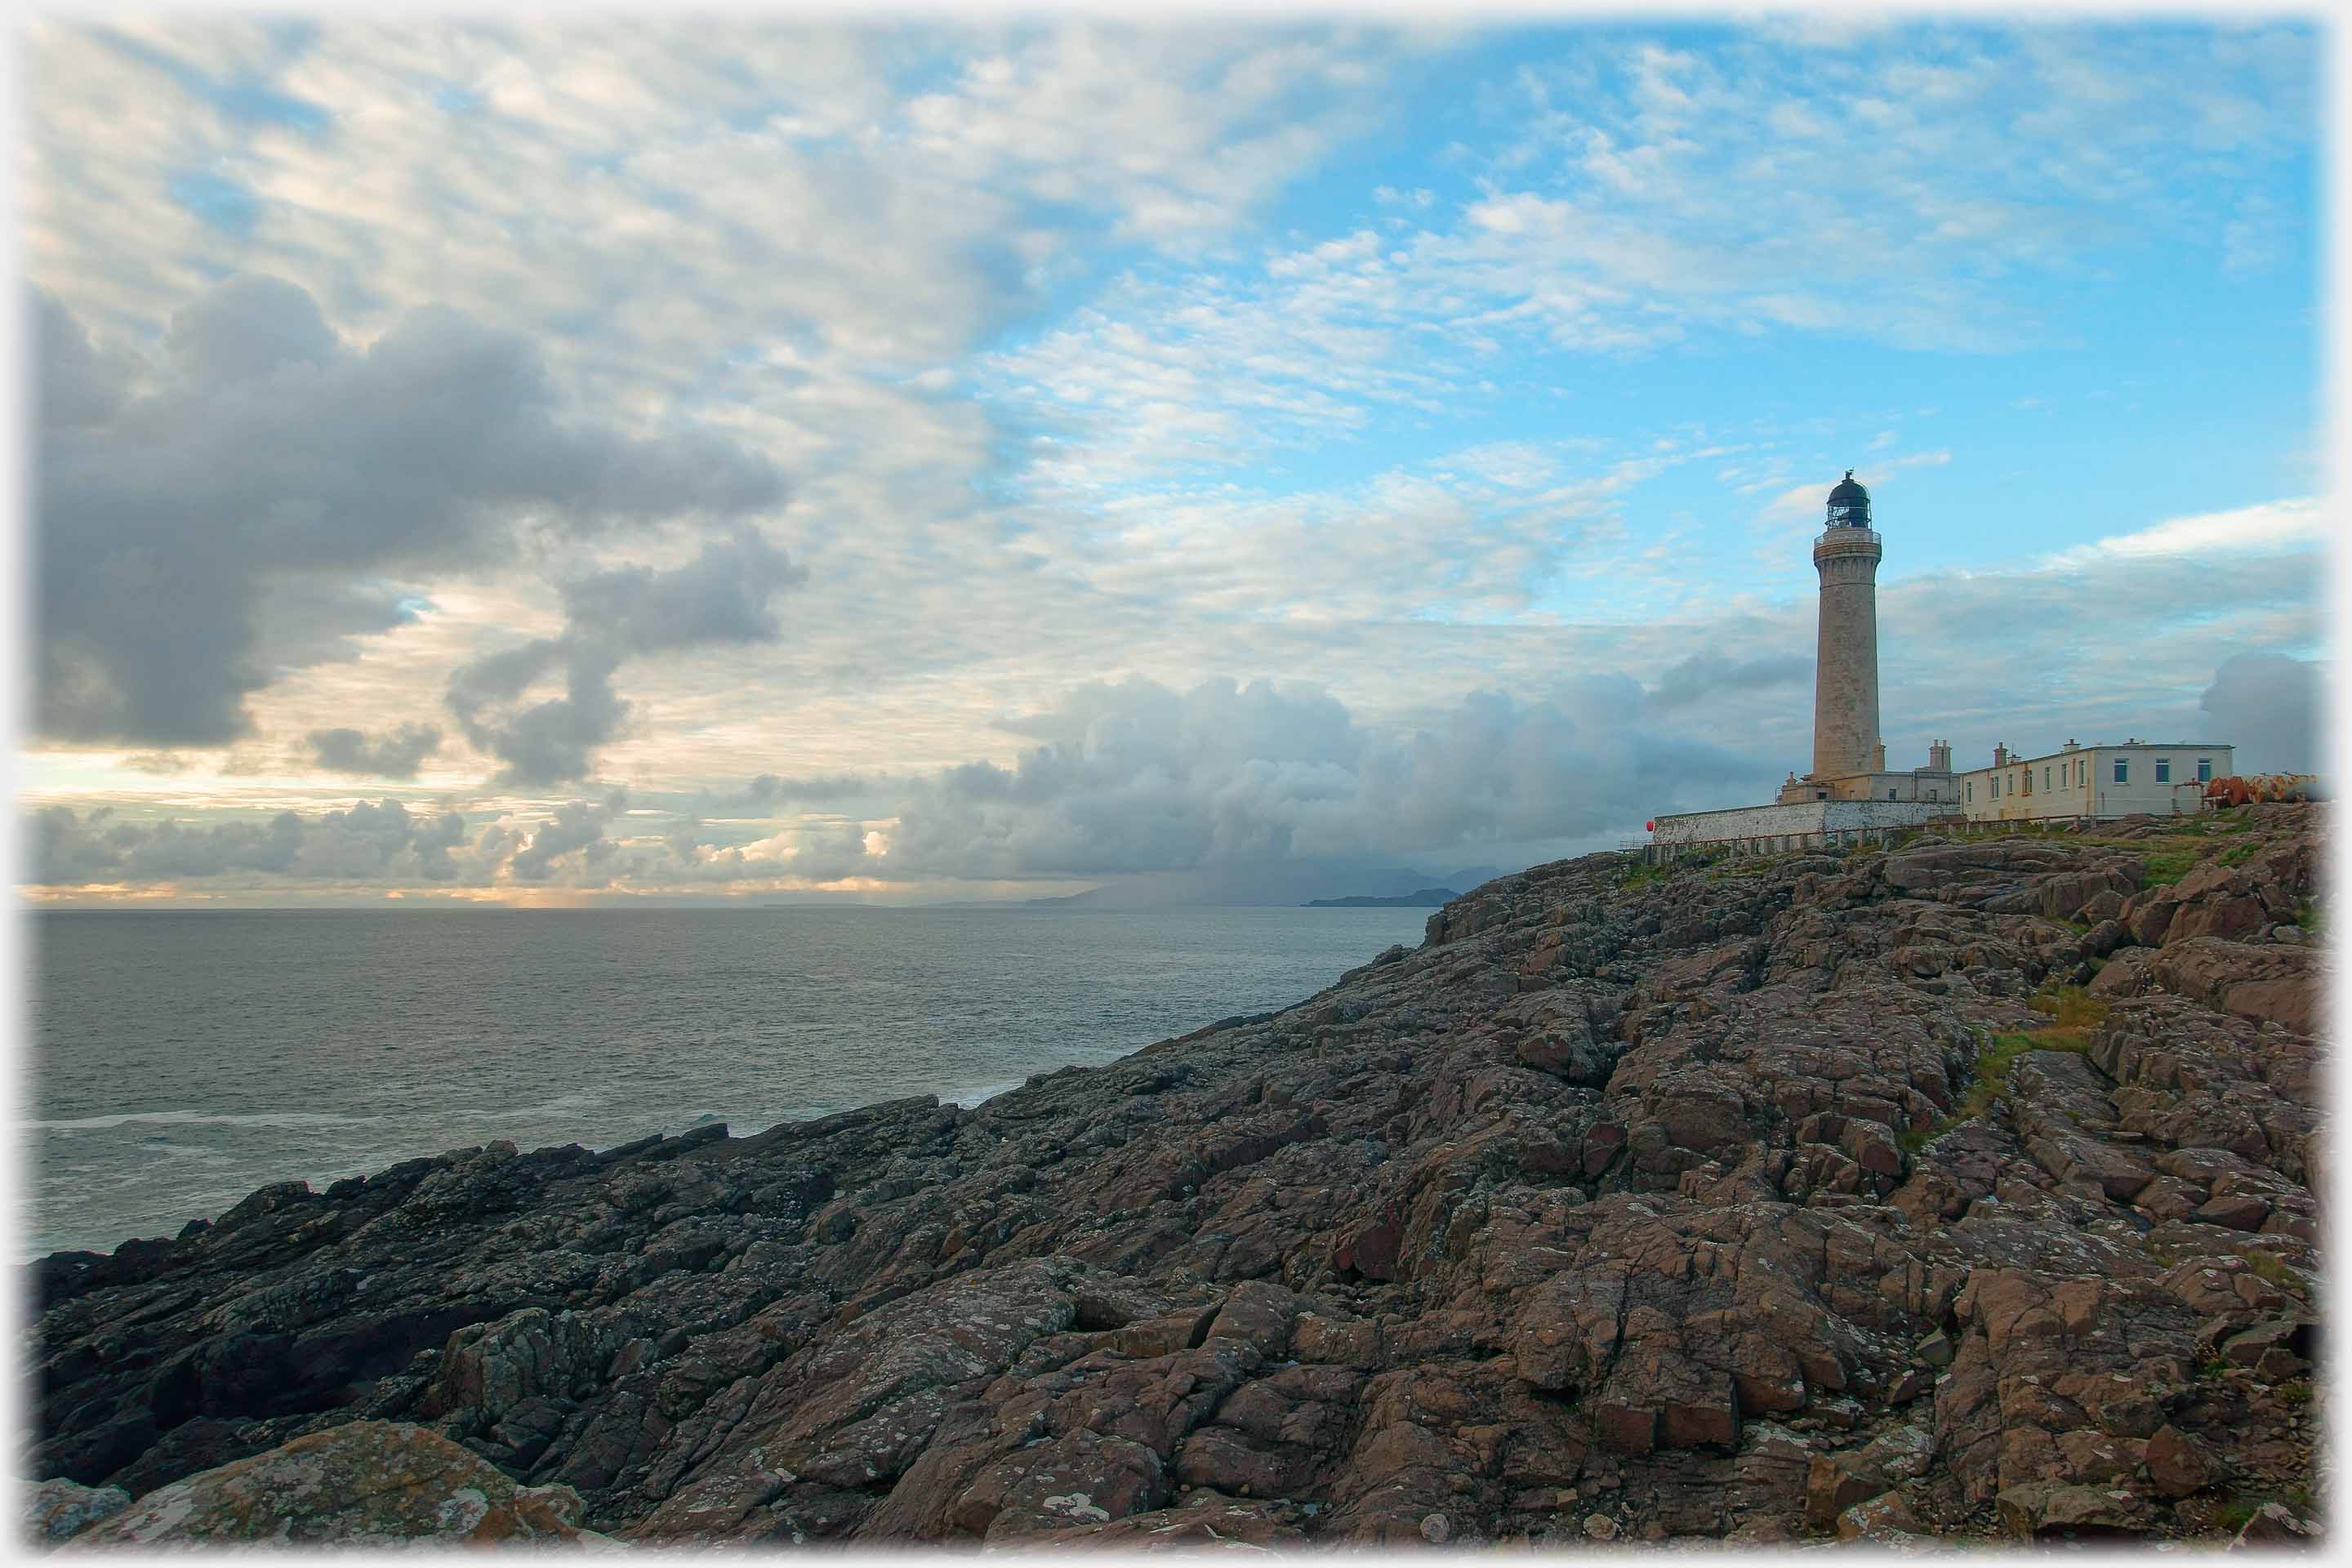 Lighthouse on rocks looking over sea.